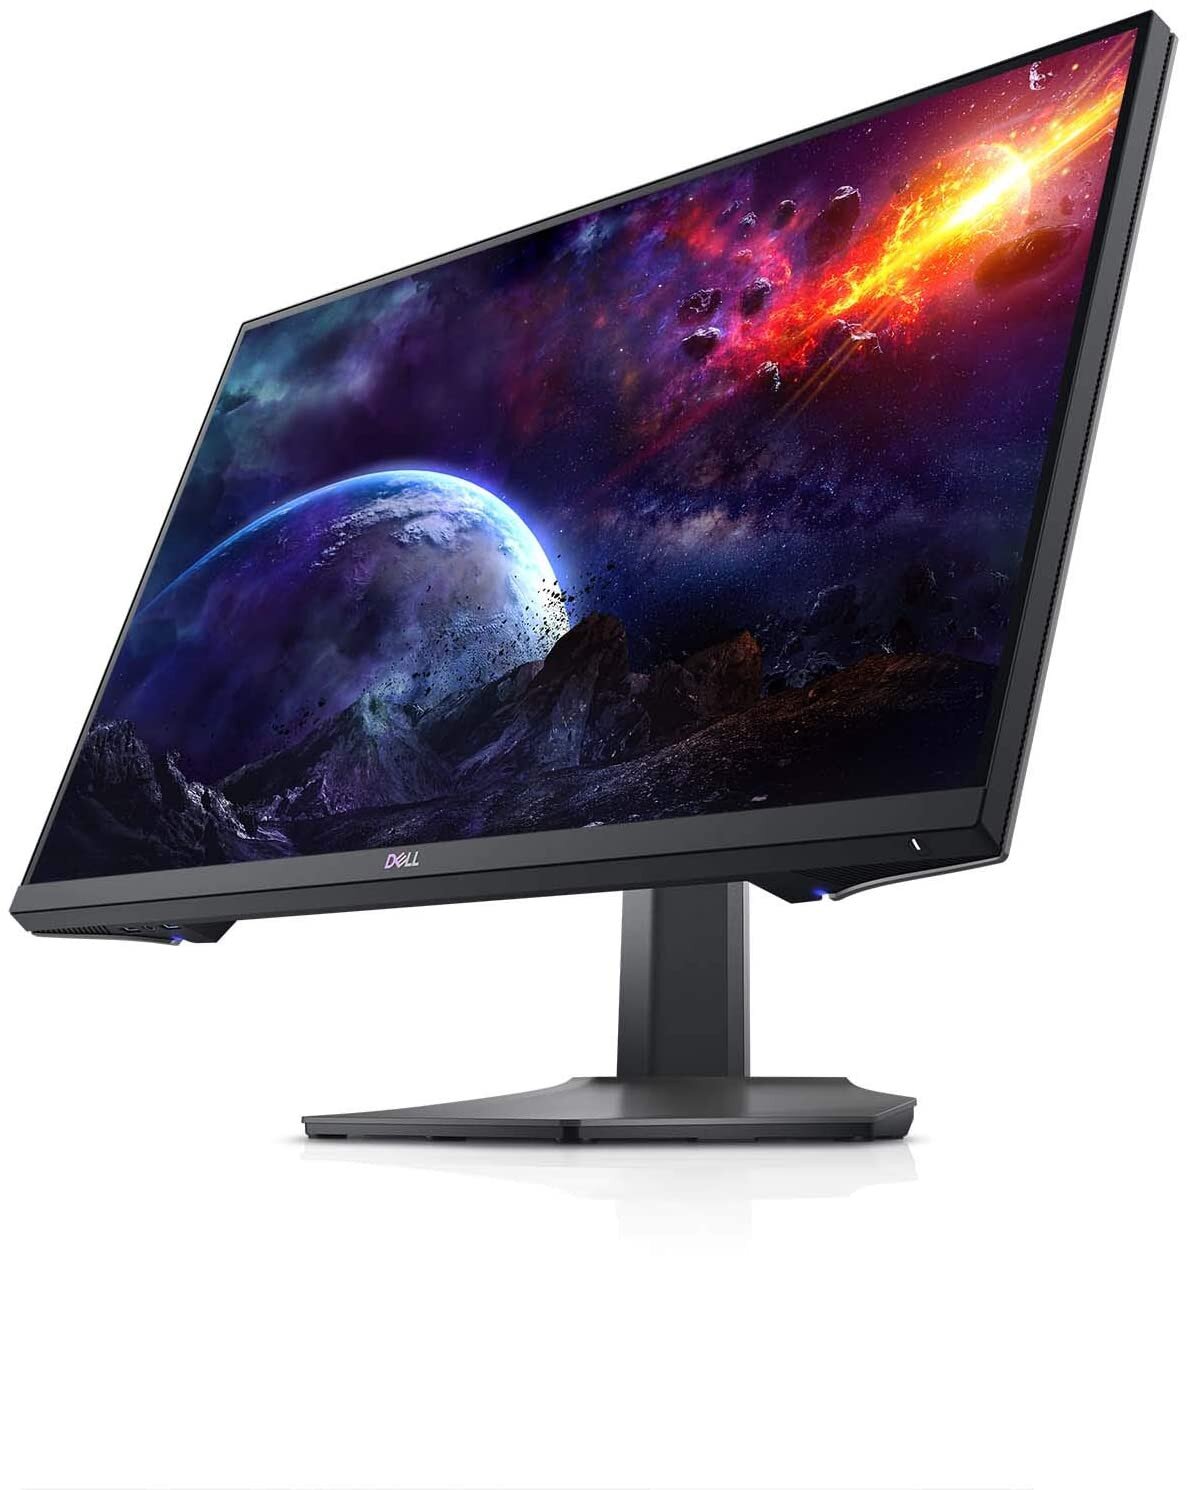 Buy Dell 27 LED-Backlit LCD Gaming Monitor - S2721DGF online in